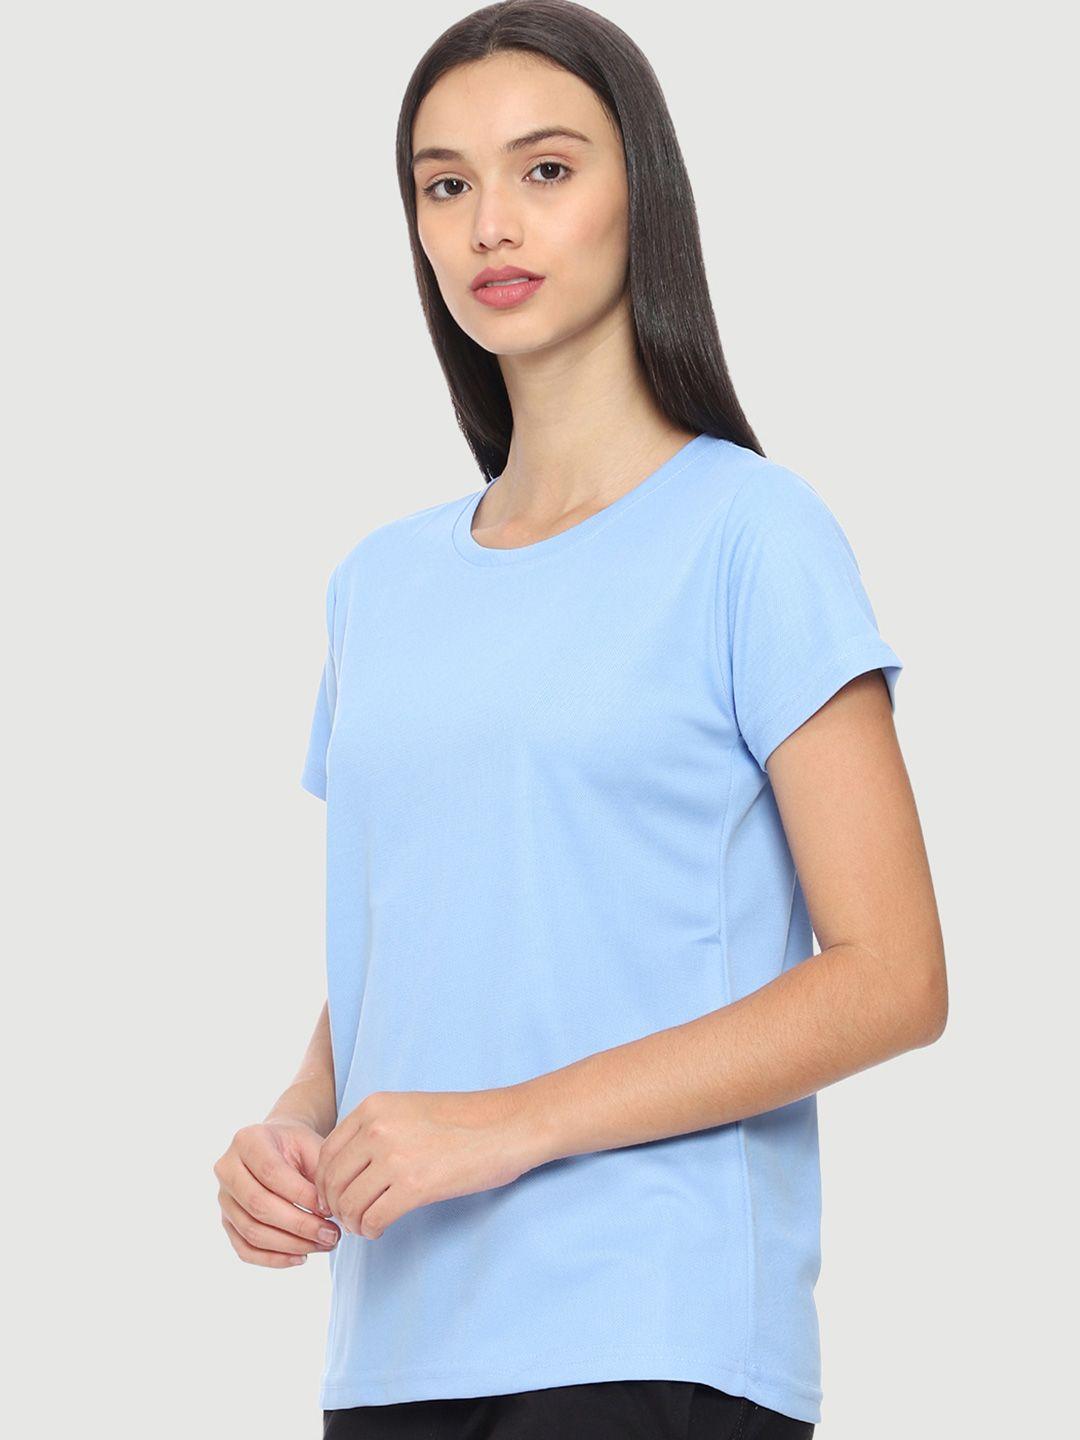 urban komfort women blue extended sleeves t-shirt